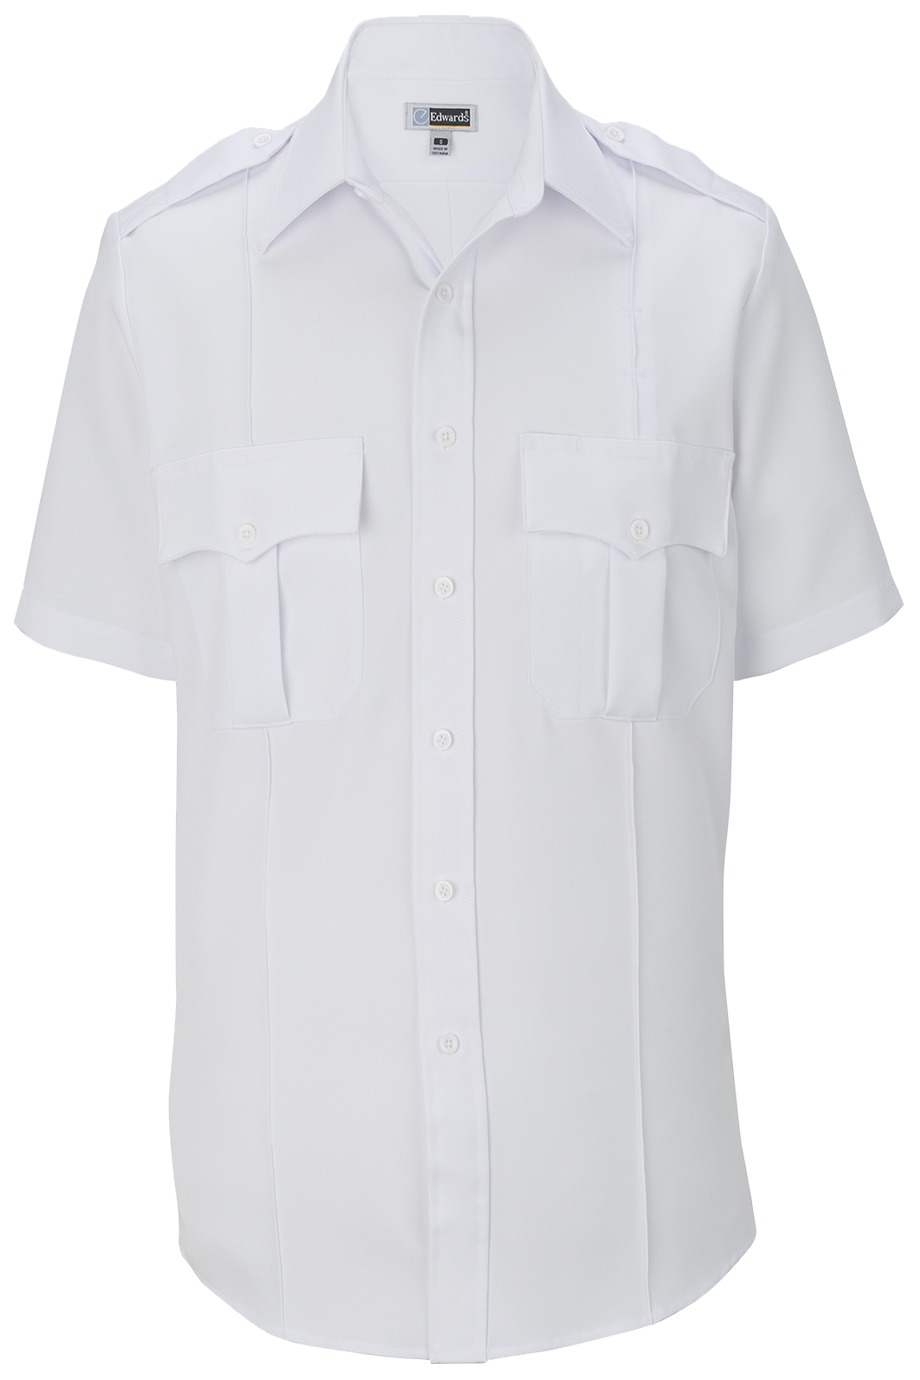 Edwards Garment 1226 - Security Short Sleeve Shirt Polyester/Cotton Blend